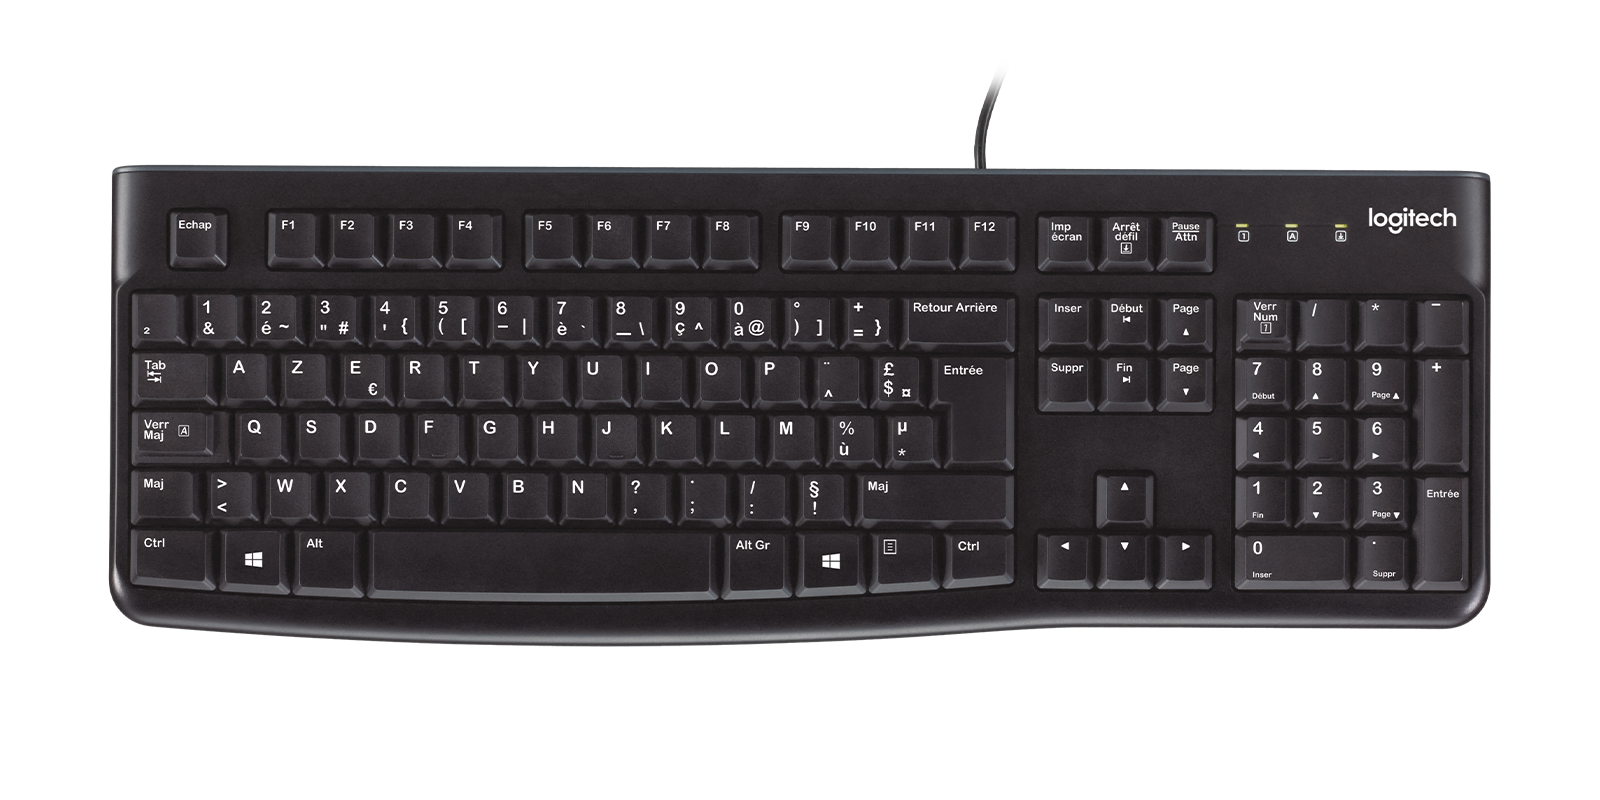 Logitech K120 USB Standard Computer Keyboard